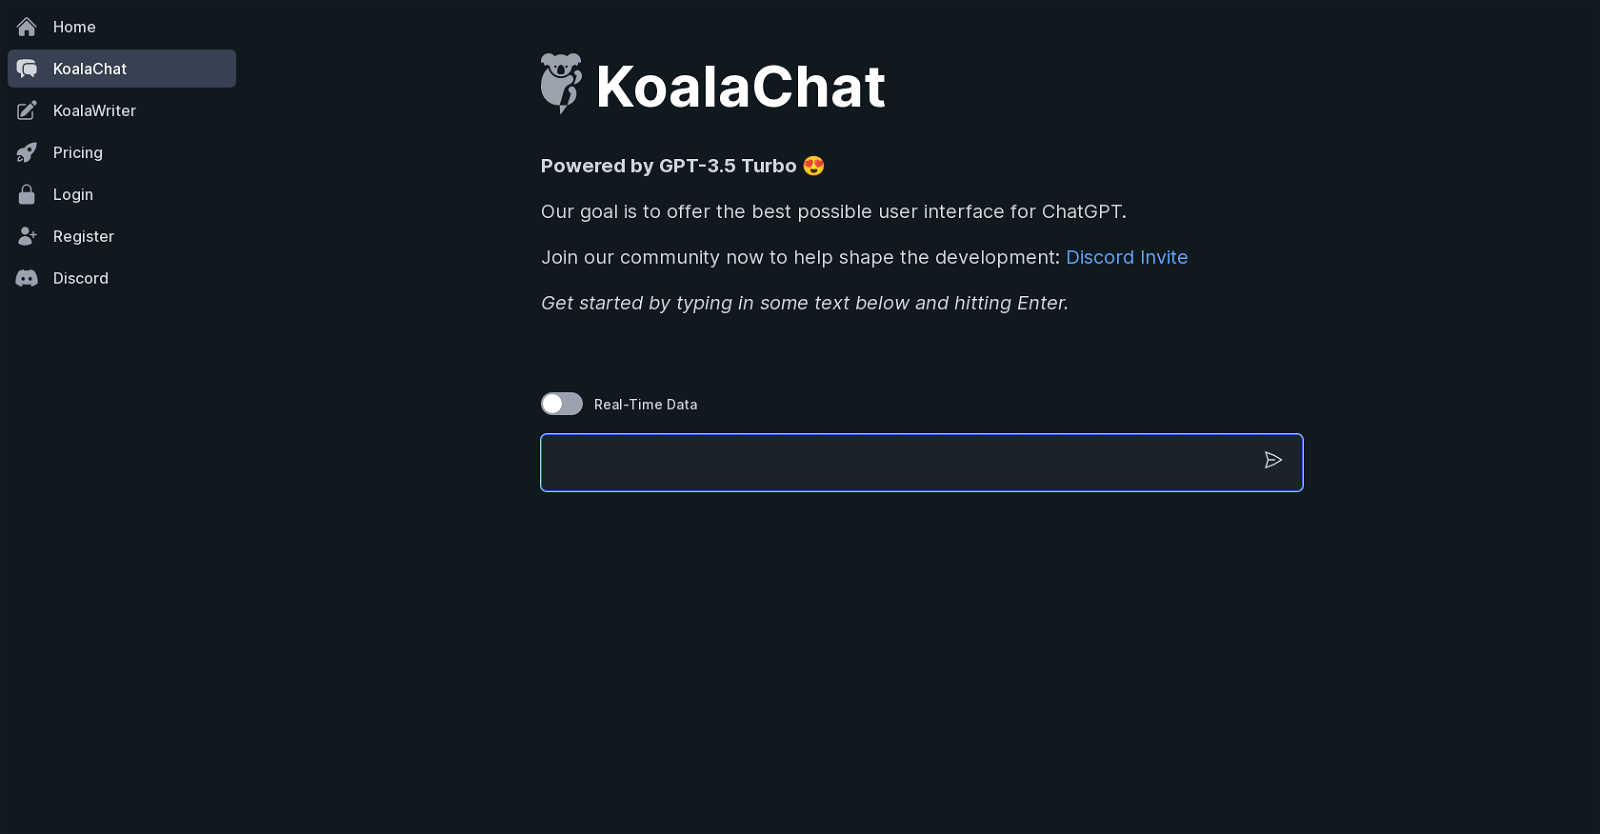 KoalaChat website